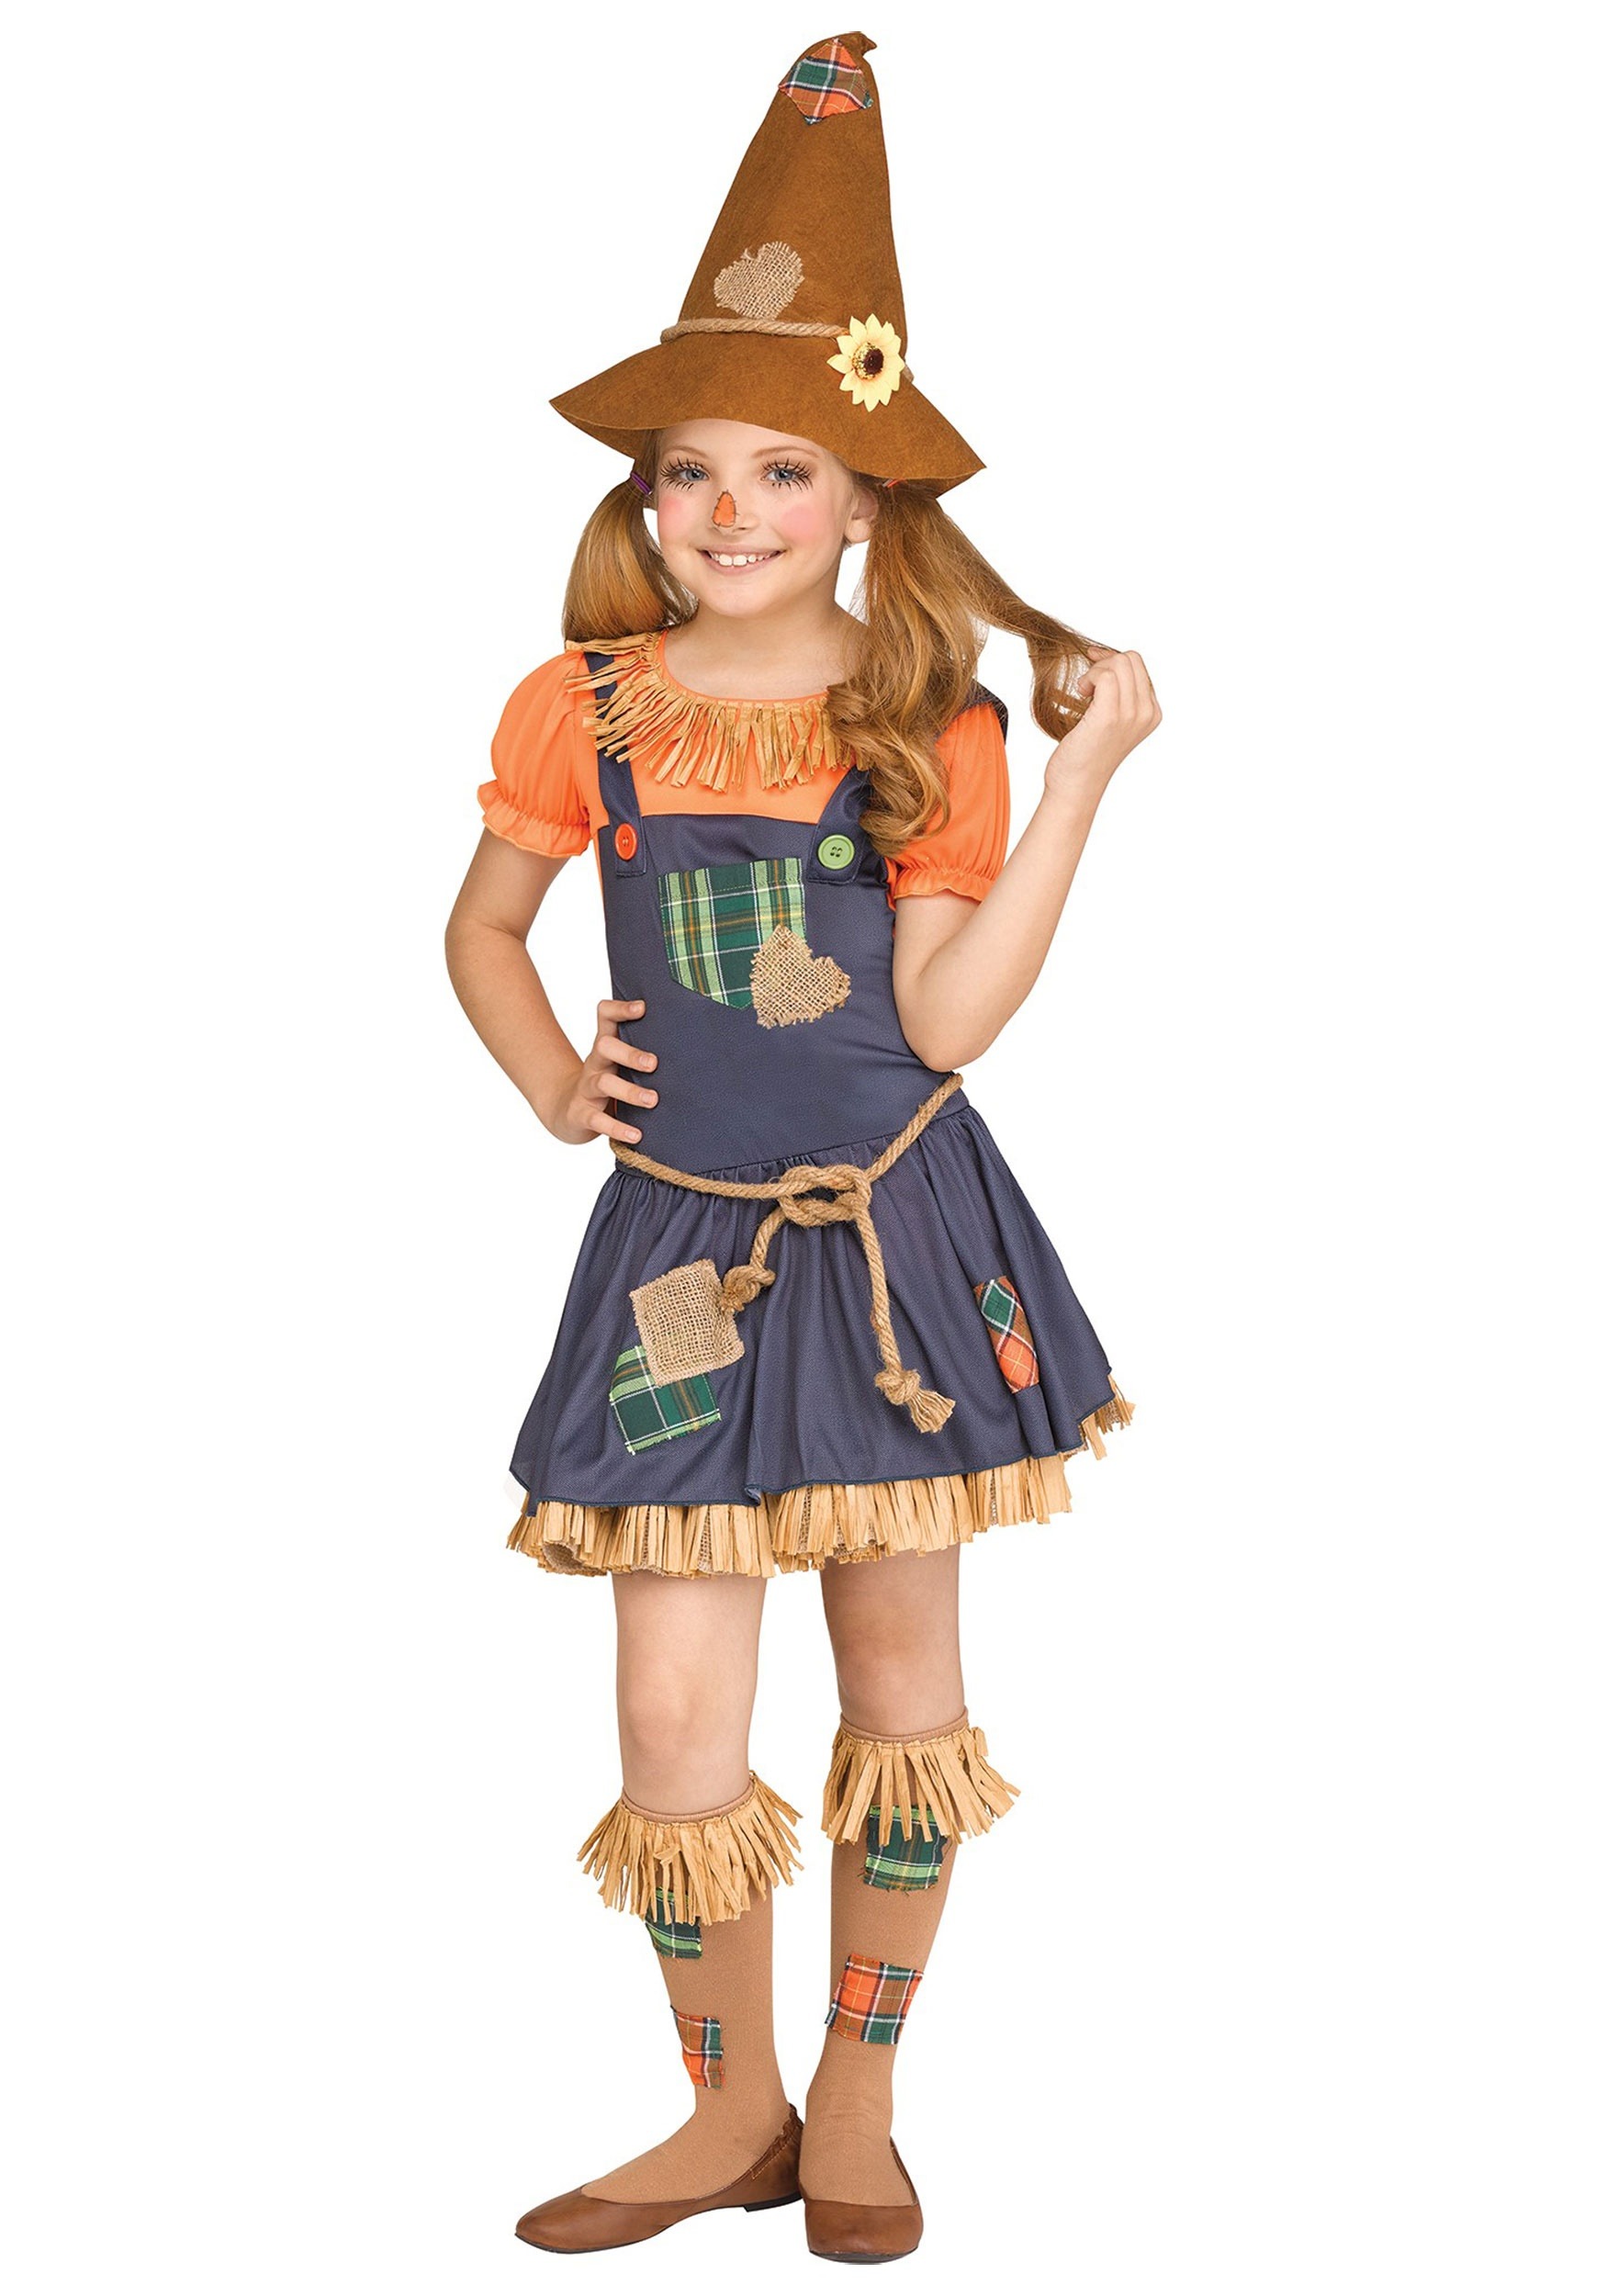 Photos - Fancy Dress Fun World Sweet Scarecrow Girl's Costume Yellow/Orange/Blue FU1154